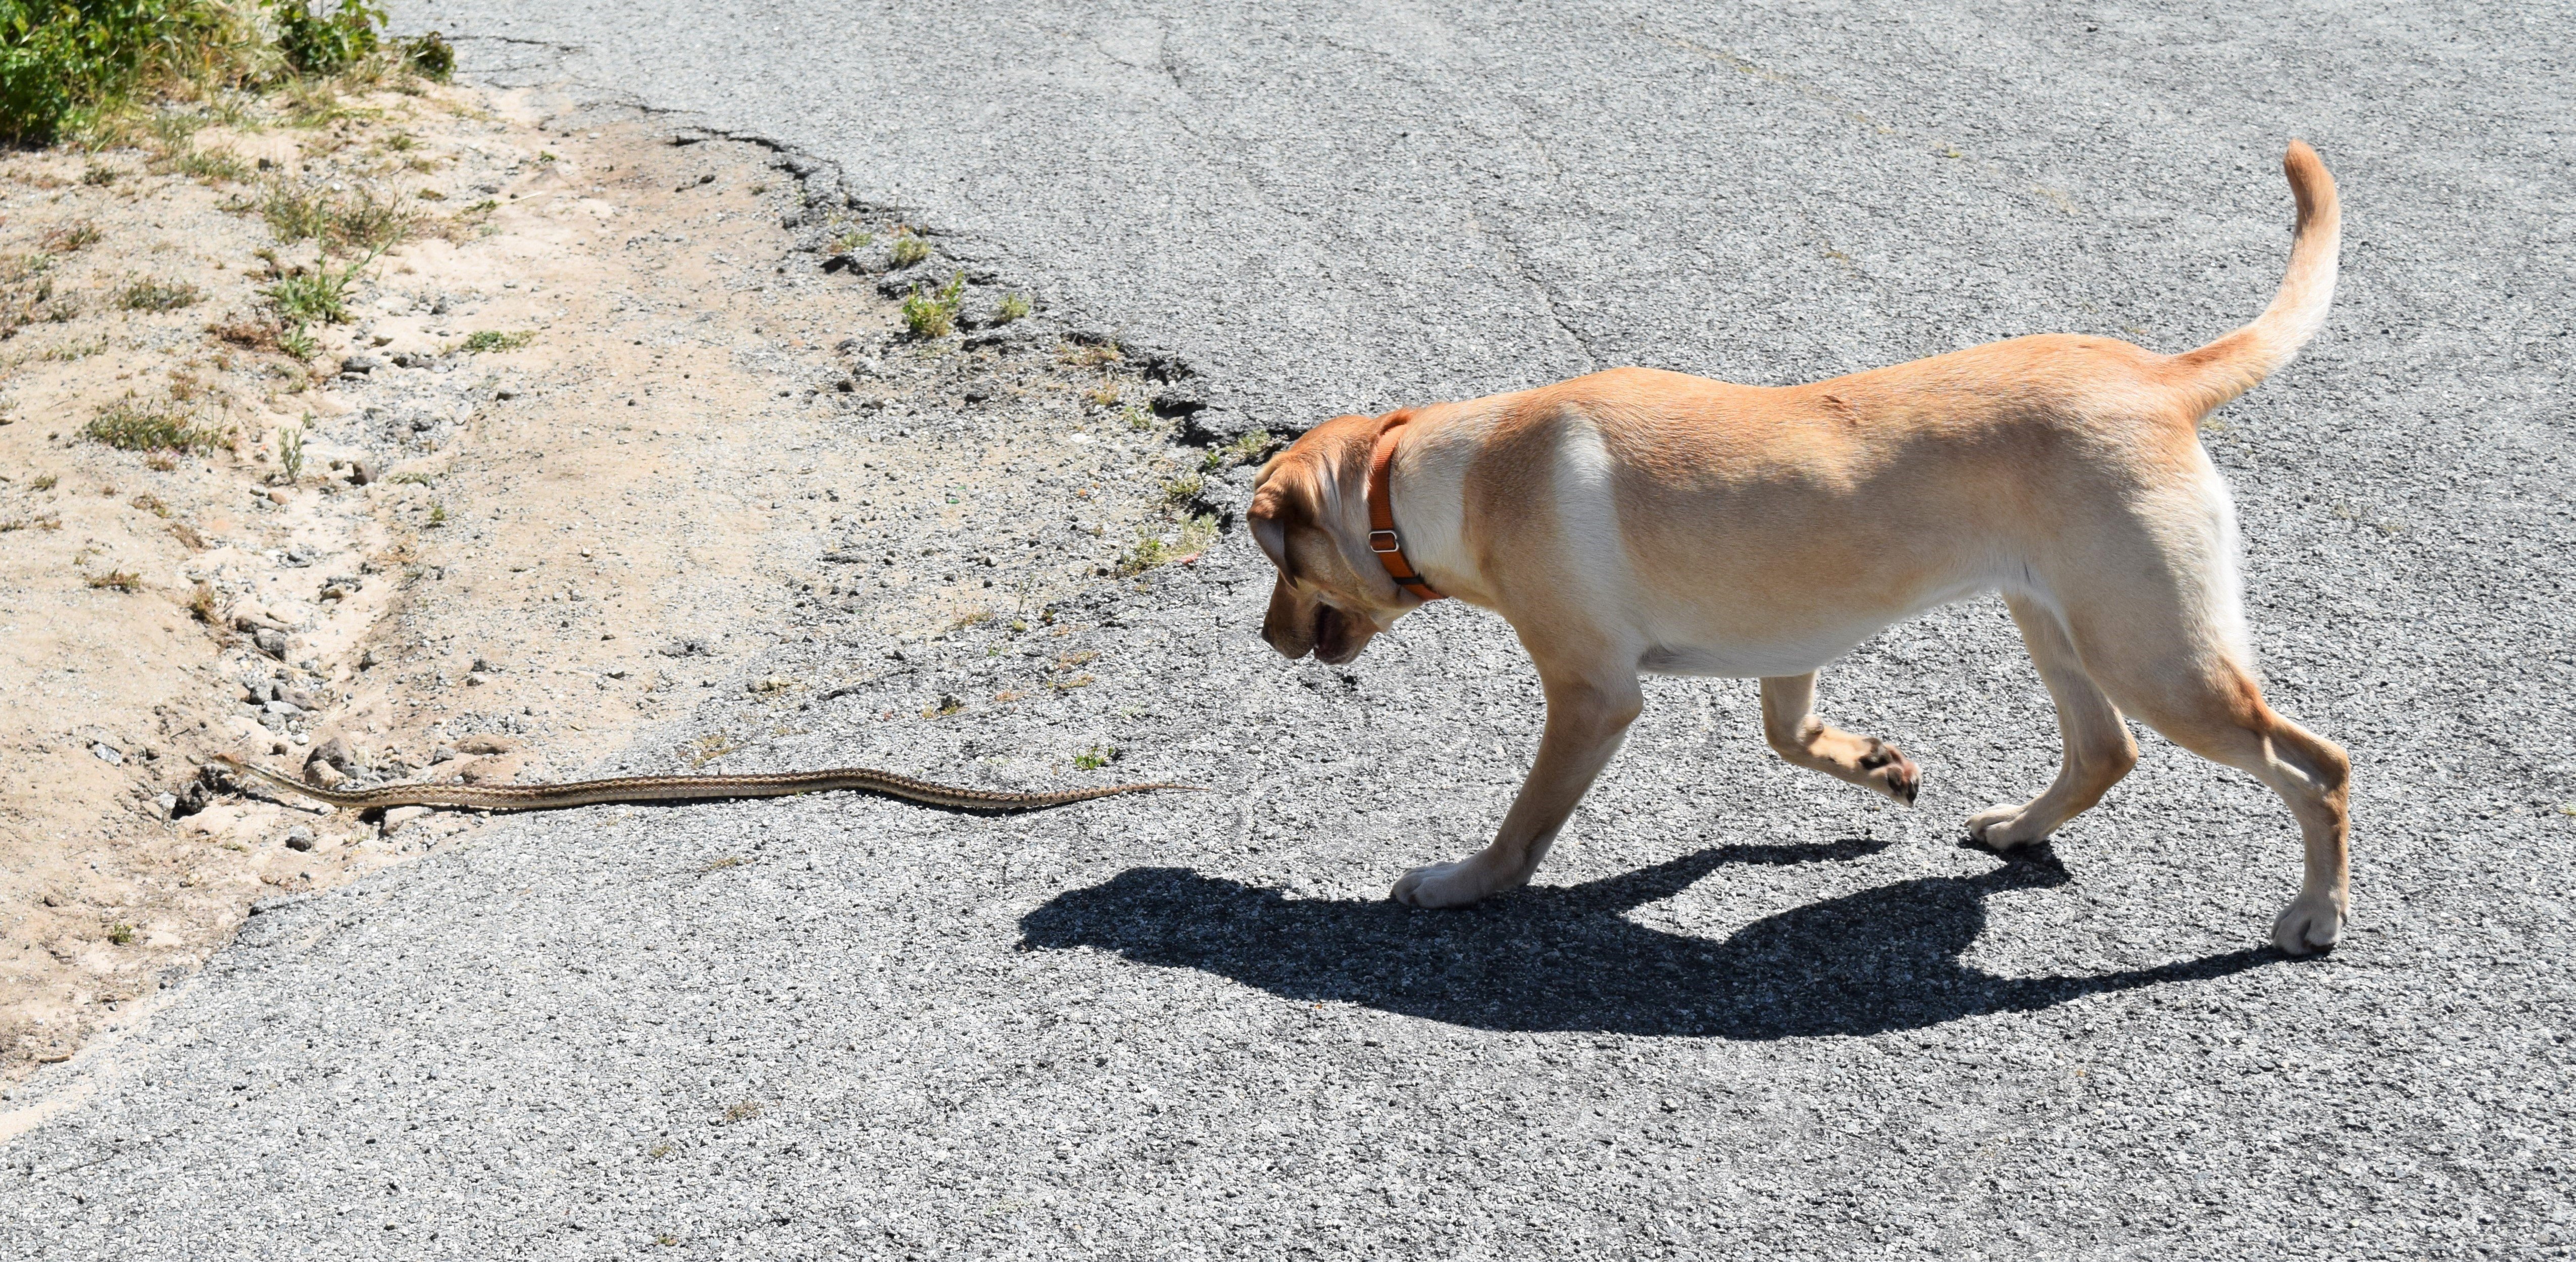 A brown dog approaches a snake | Photo: Shutterstock